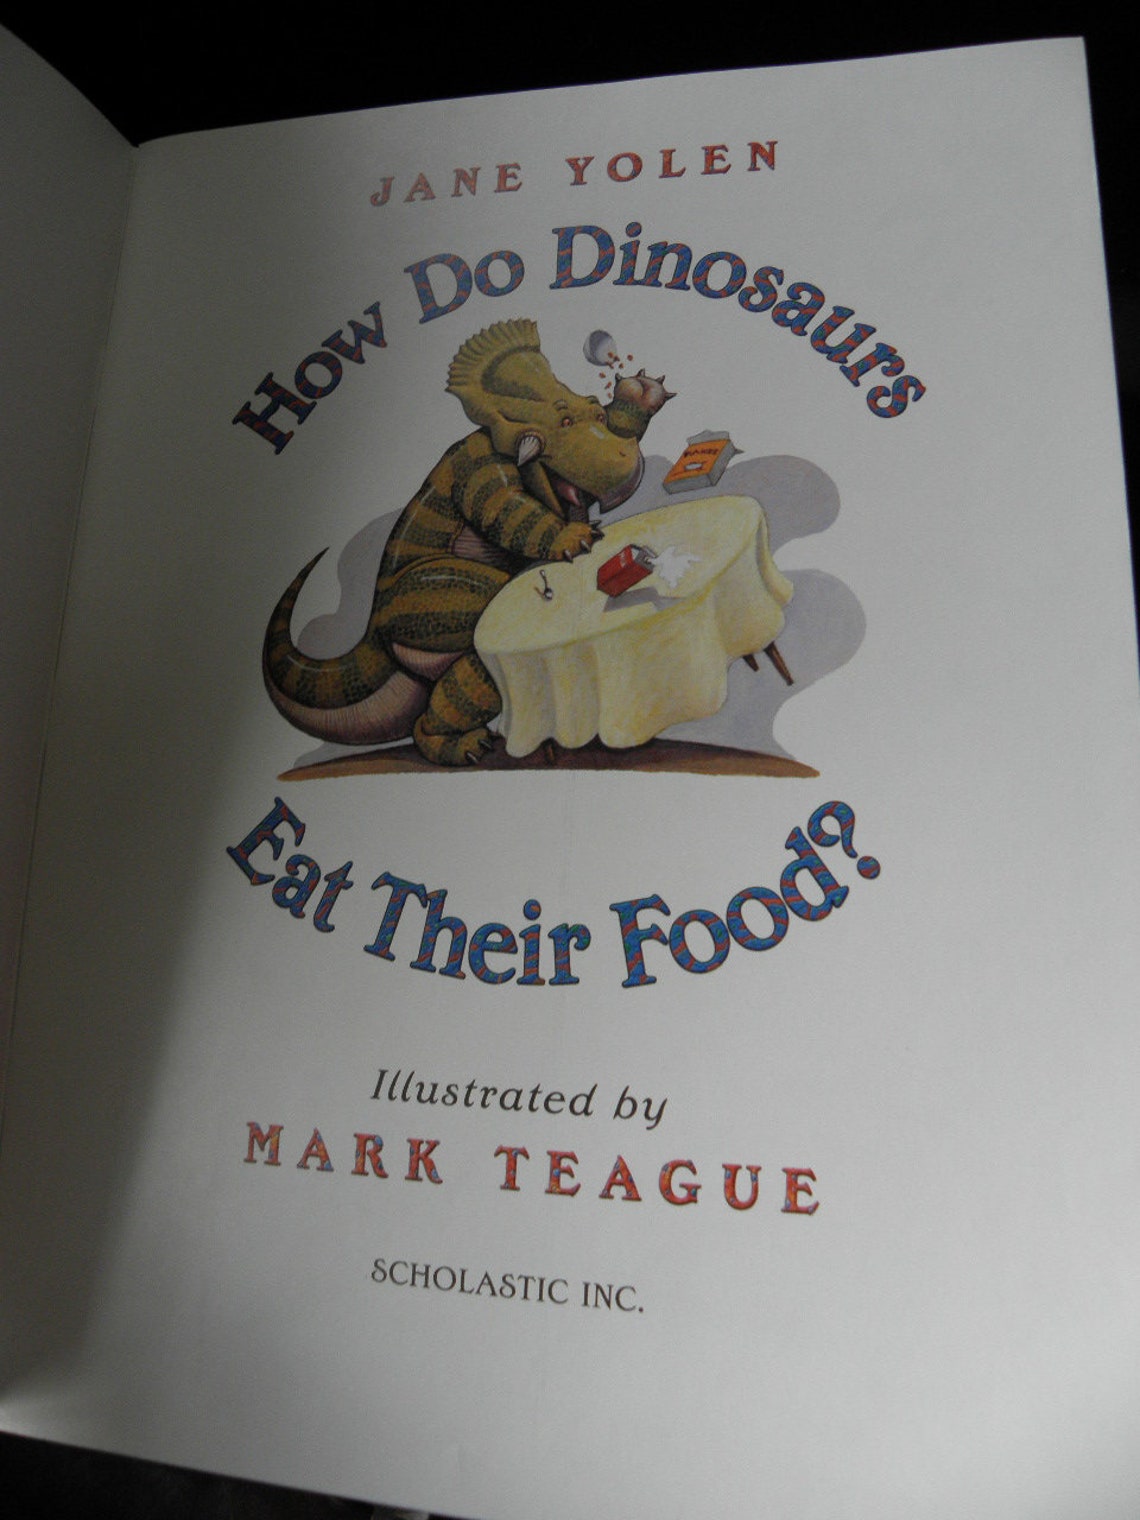 how dinosaurs eat their food